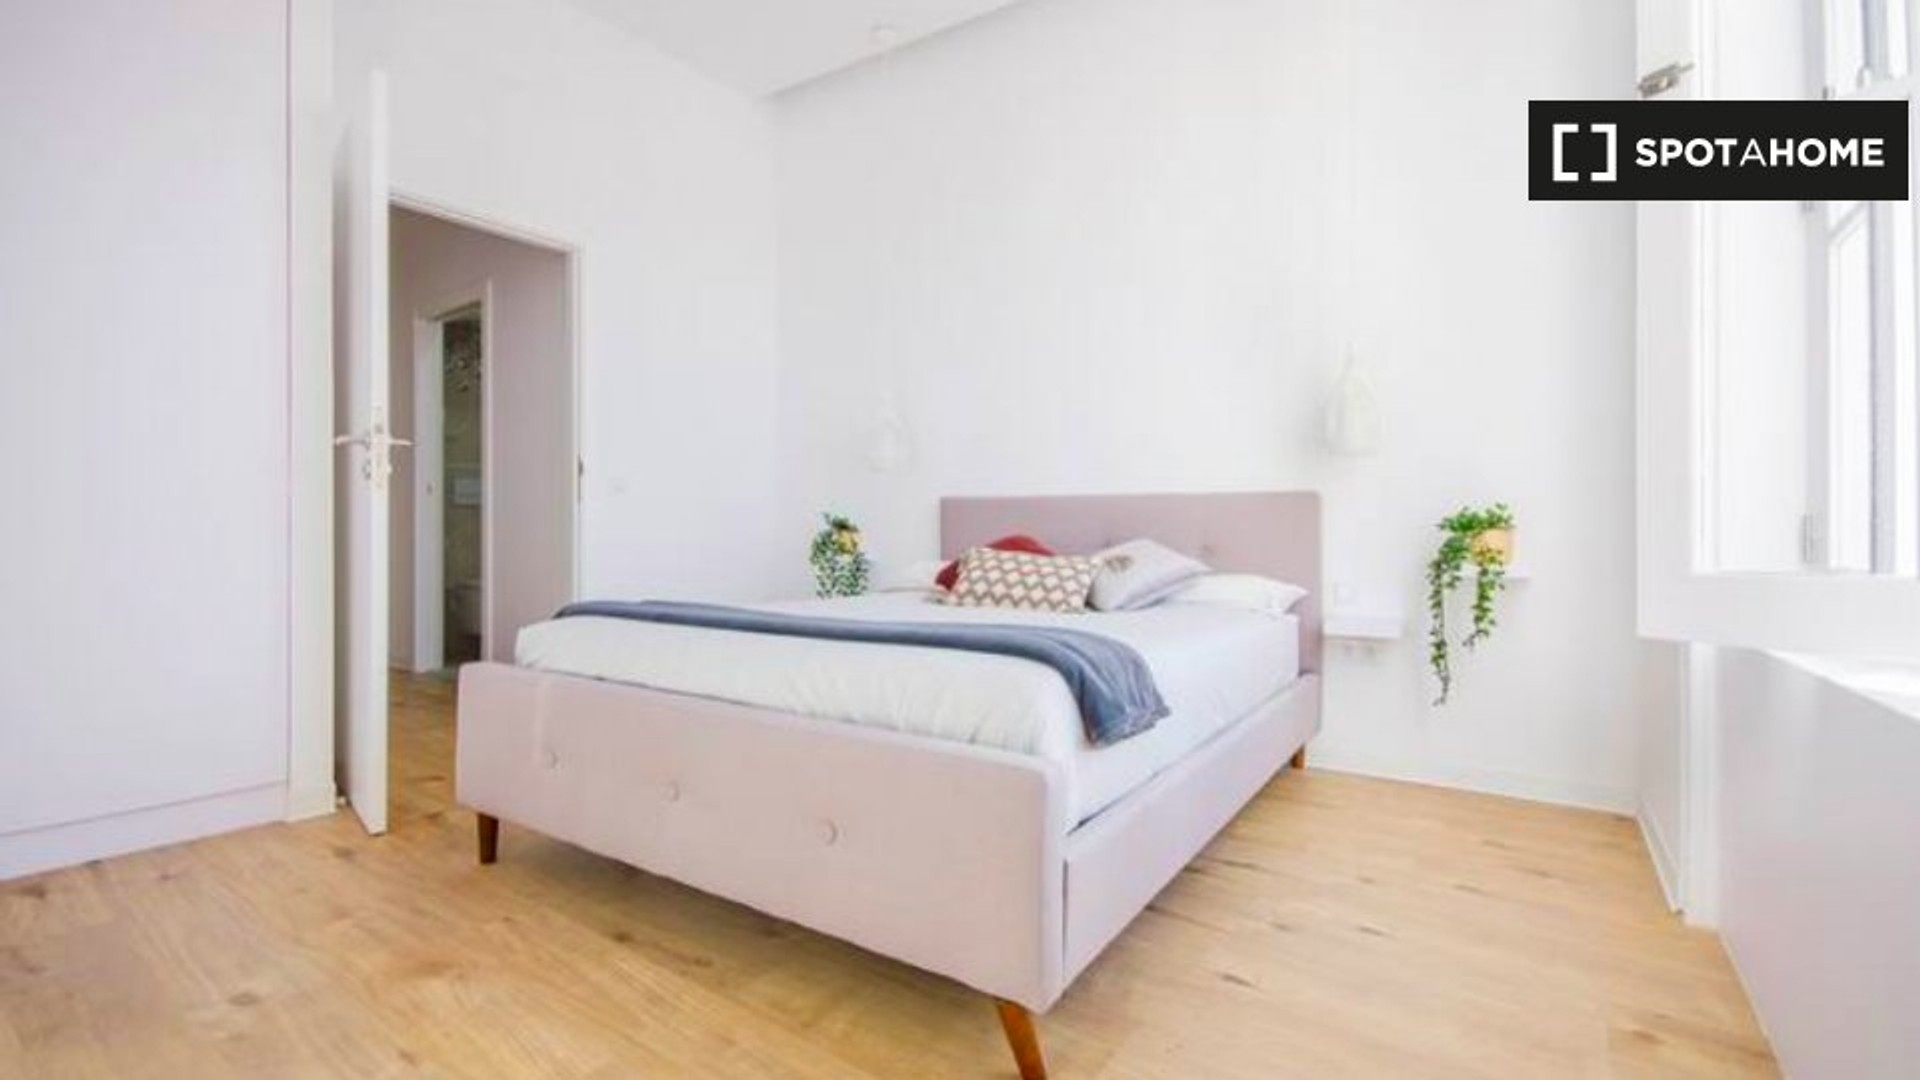 Room for rent in a shared flat in Santa Cruz De Tenerife